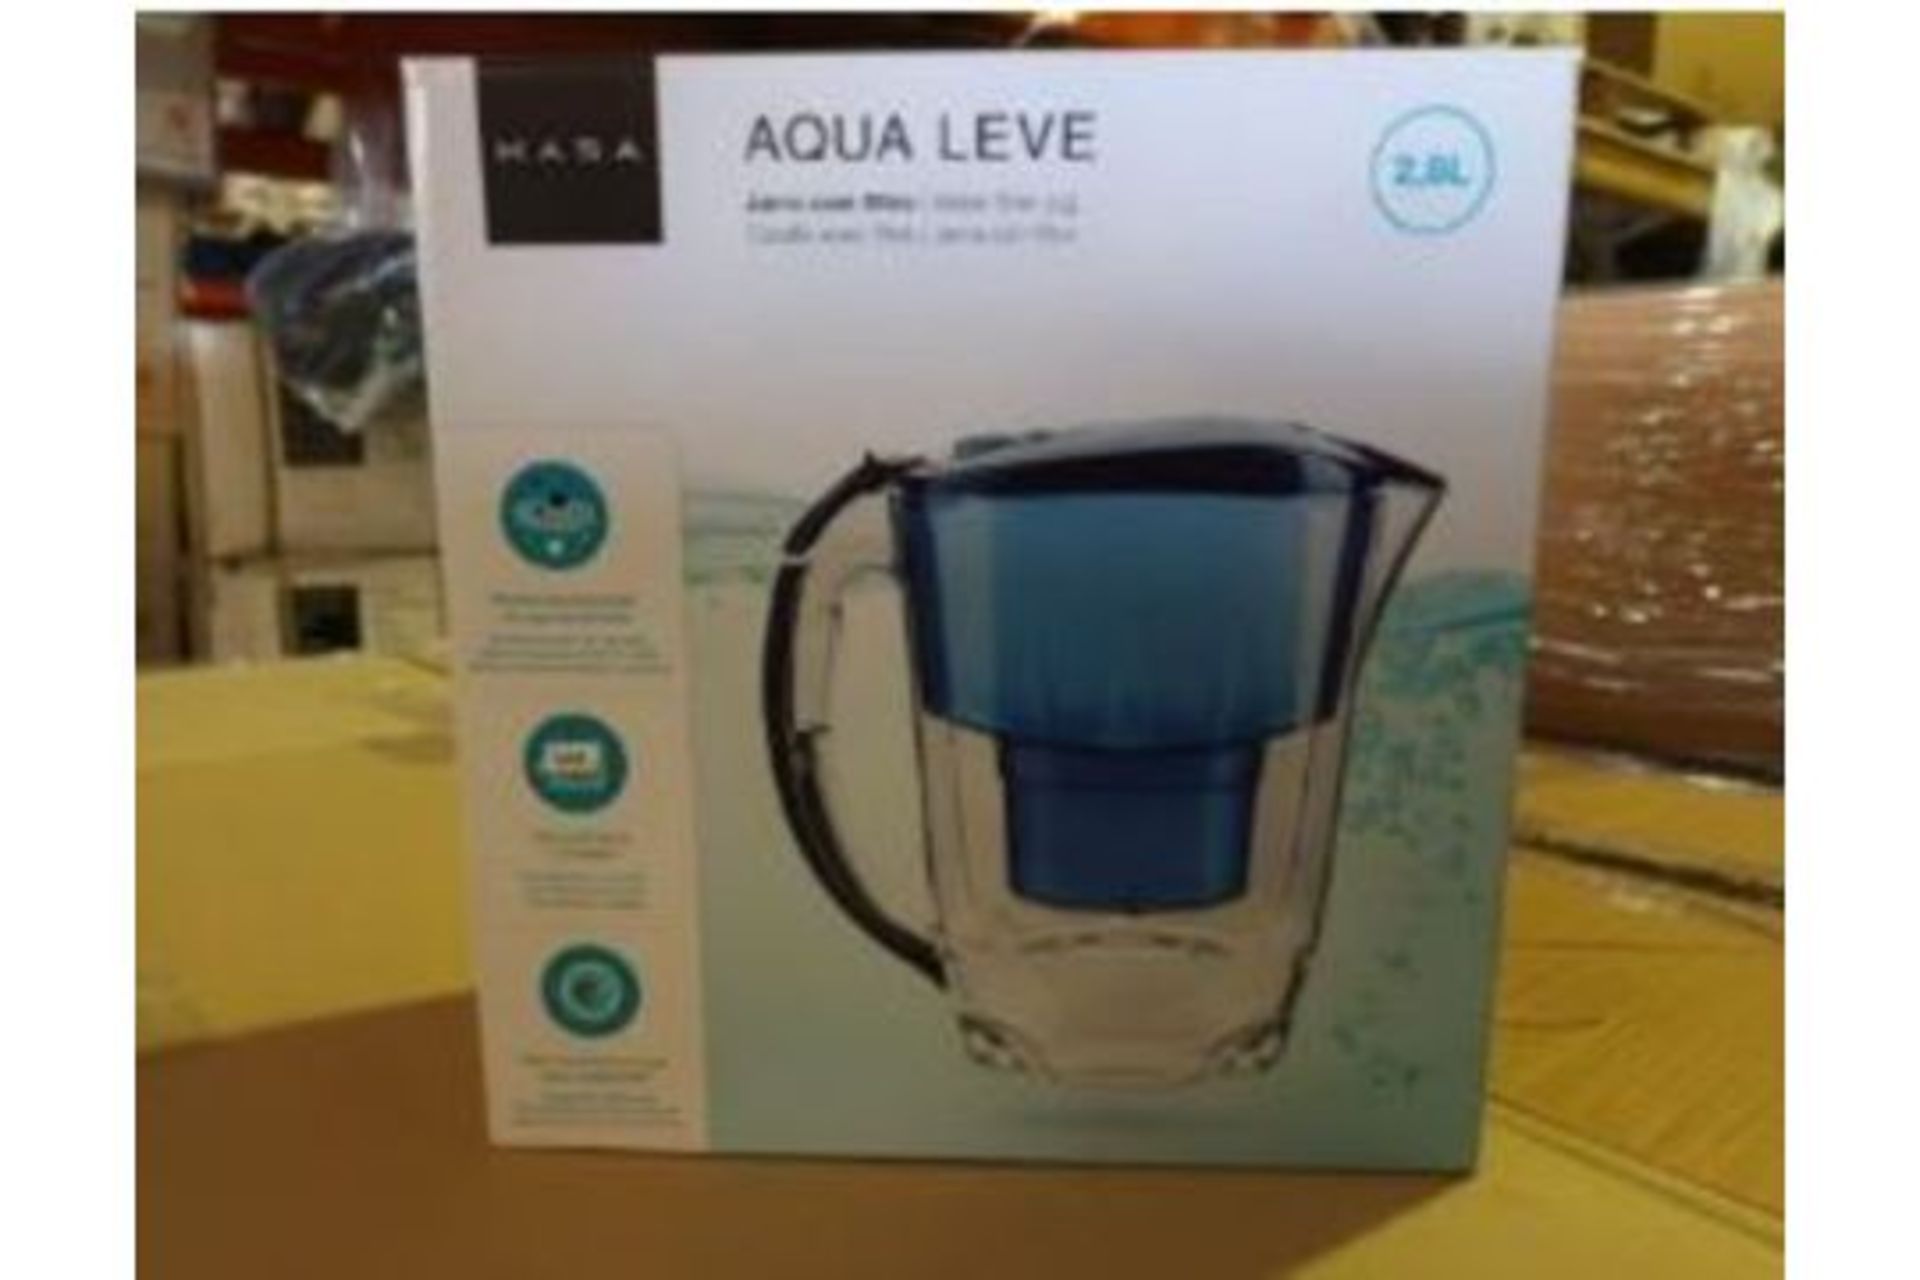 12 x New Boxed Kasa Oria Aqua Leve 2.8L Water Filter Jugs. Each Includes 1 x Filter. RRP £19.99